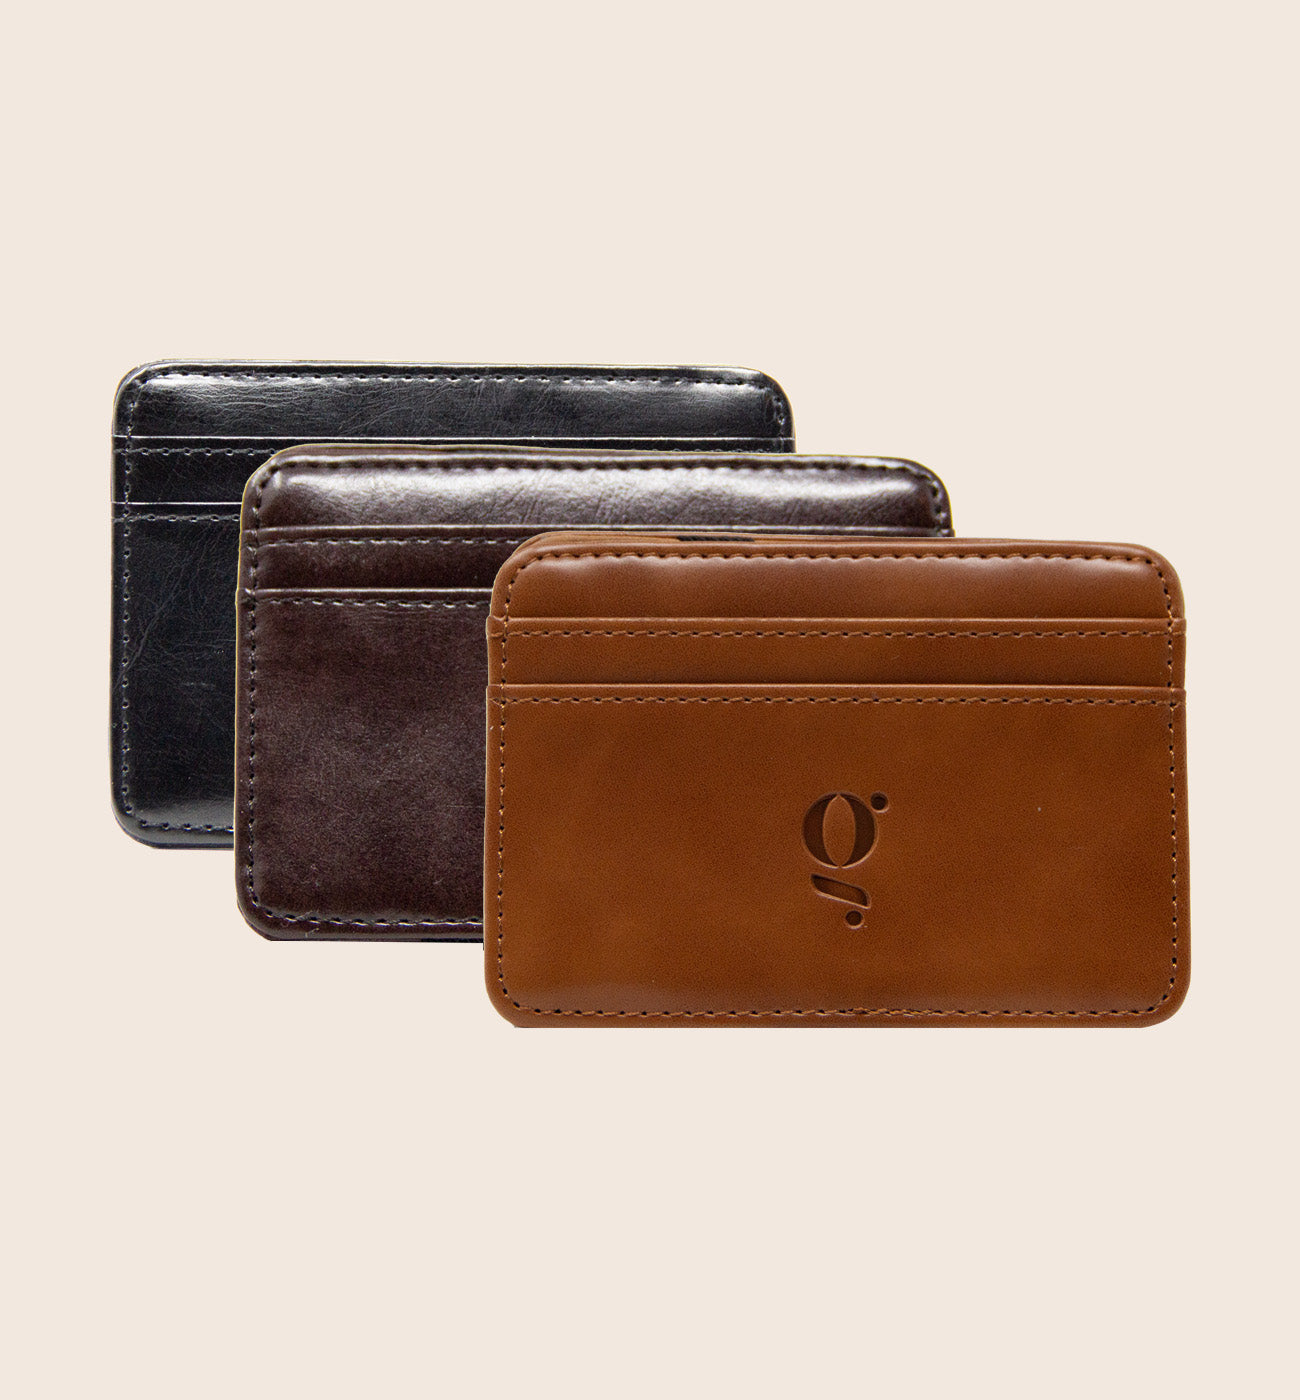 100% Genuine Leather Magic Wallet for men, Money Clip Wallet